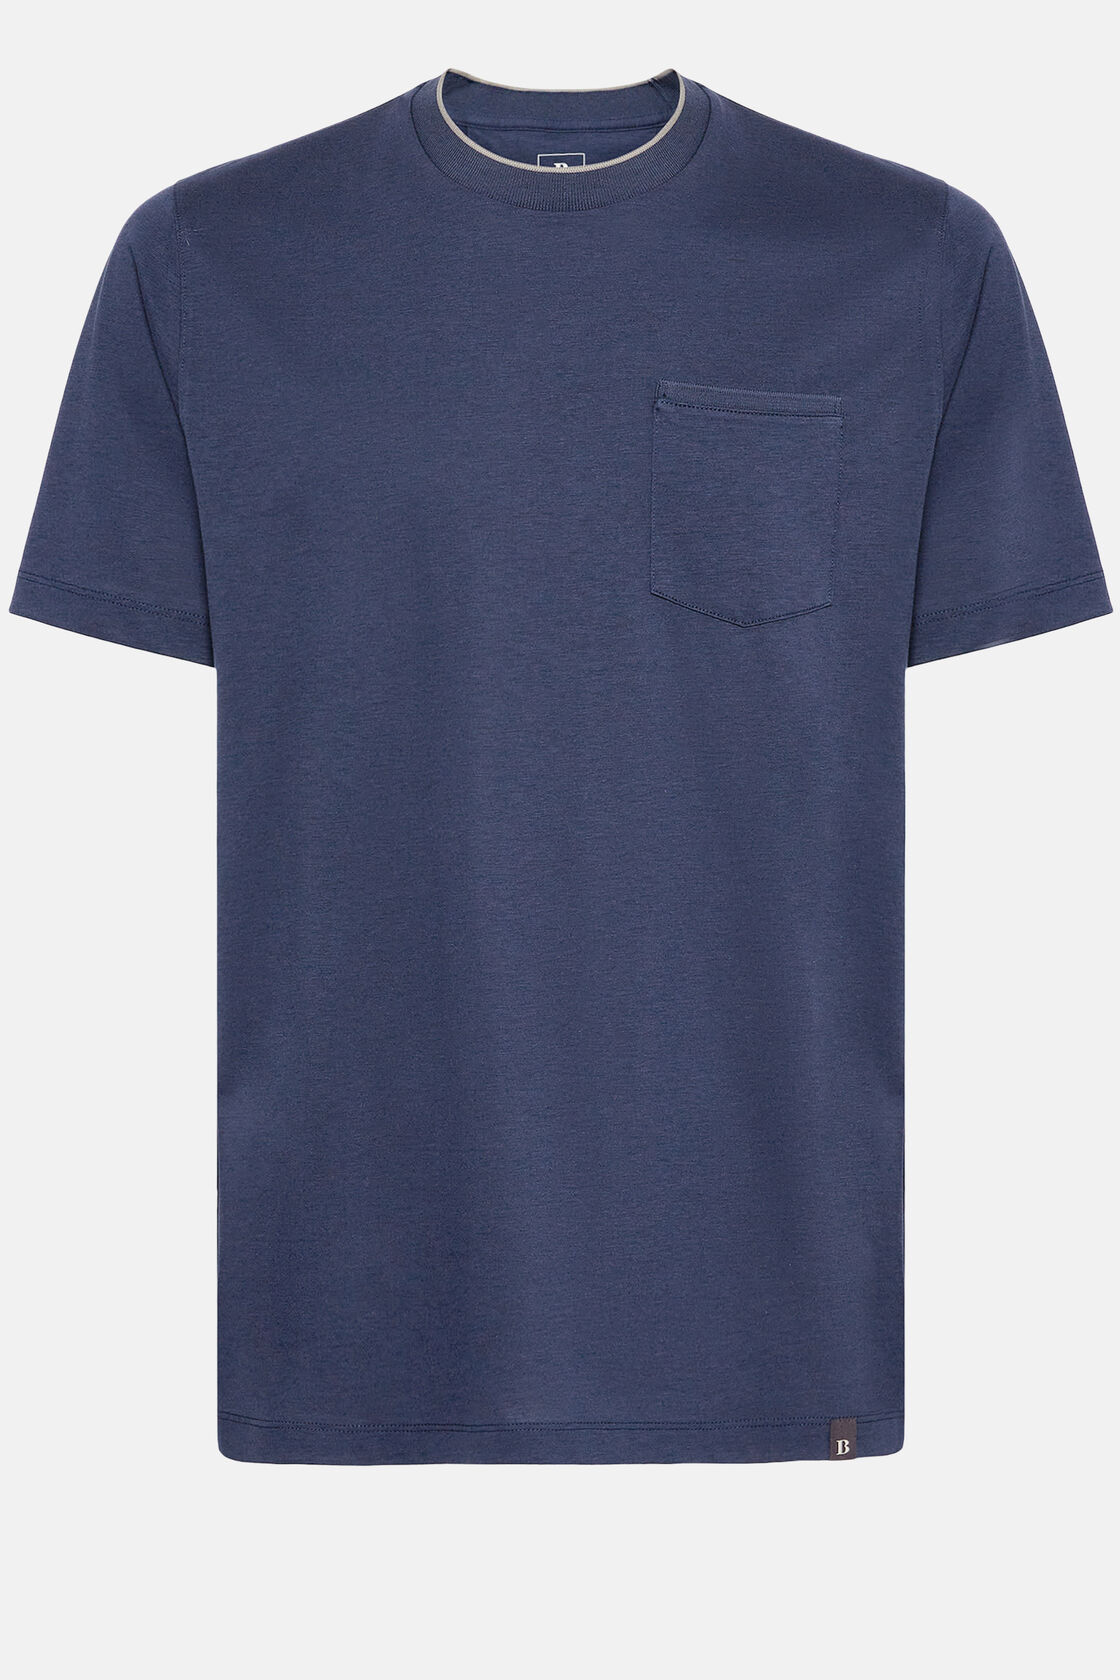 T-Shirt aus Baumwoll-Tencel-Jersey, Navy blau, hi-res